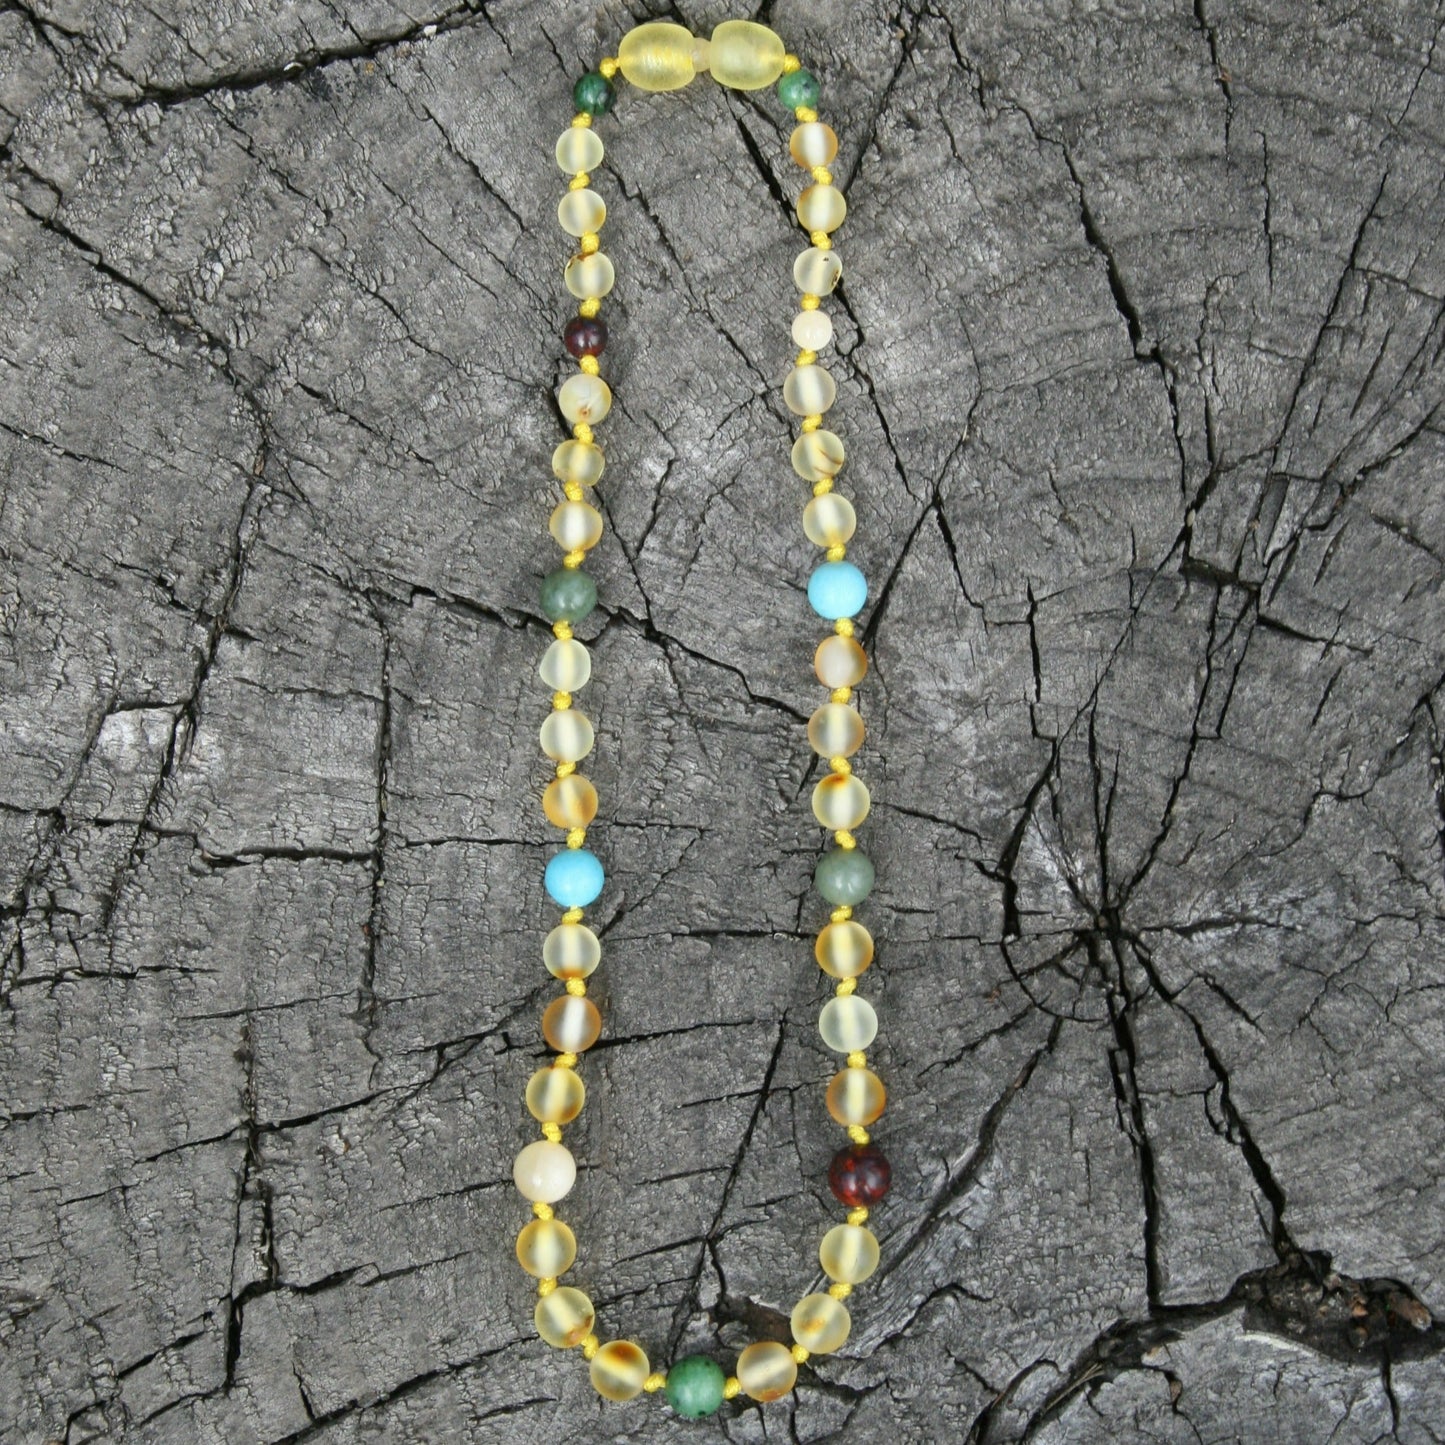 Acid Reflux Baltic Amber Teething Necklace, Bracelet, or Anklet- Raw & Unpolished (children and adult sizes) - necklace / bracelet on wooden background - amber variation